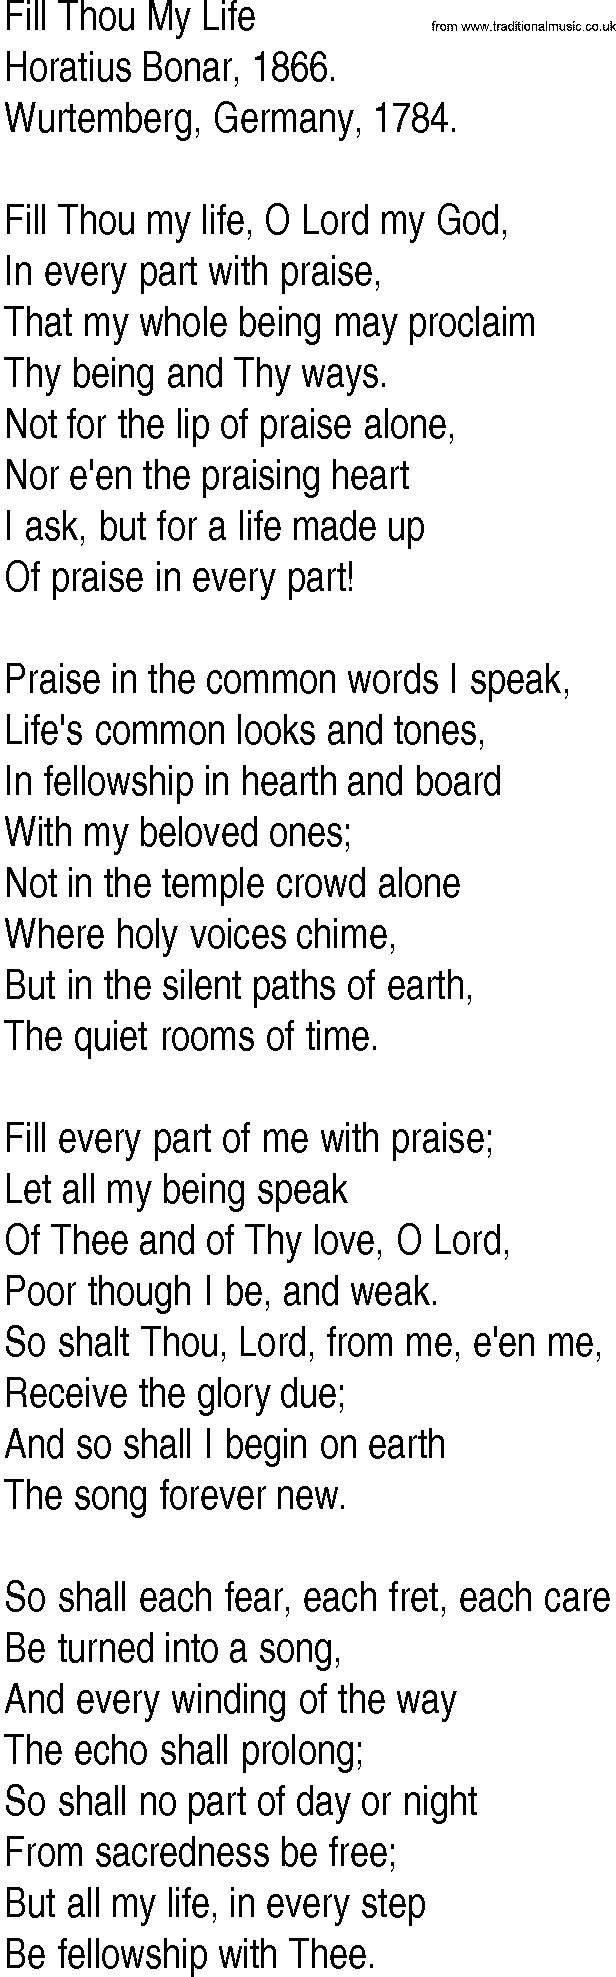 Hymn and Gospel Song: Fill Thou My Life by Horatius Bonar lyrics